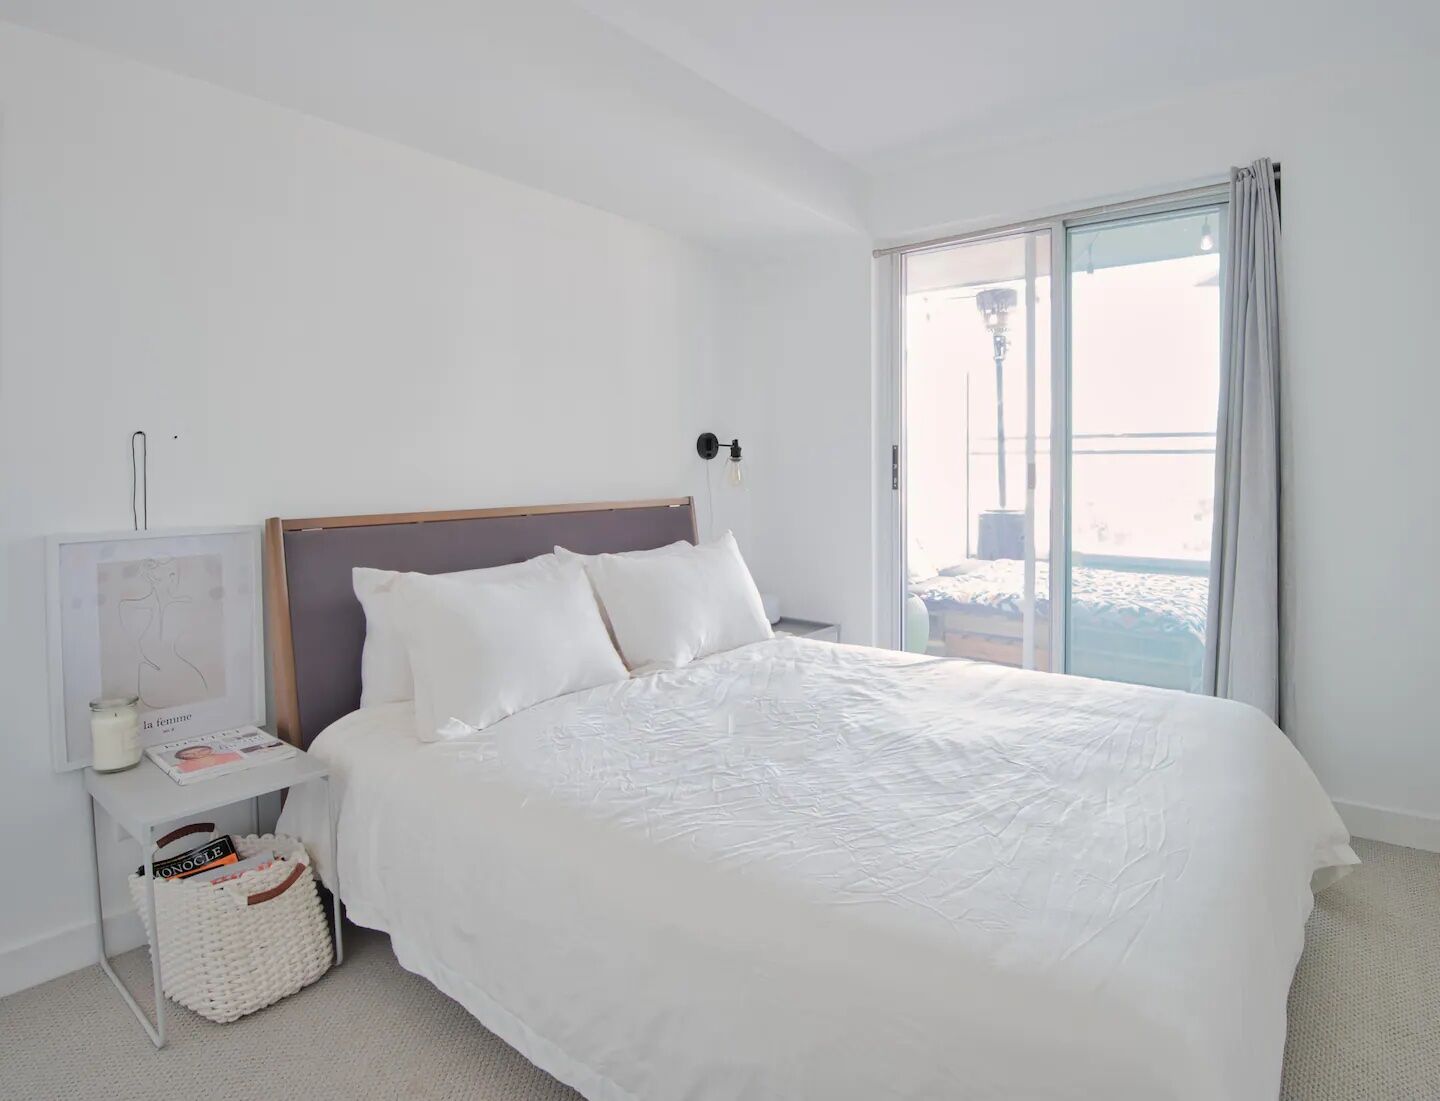 11 Airbnb Toronto Rentals With Gorgeous Skyline Views